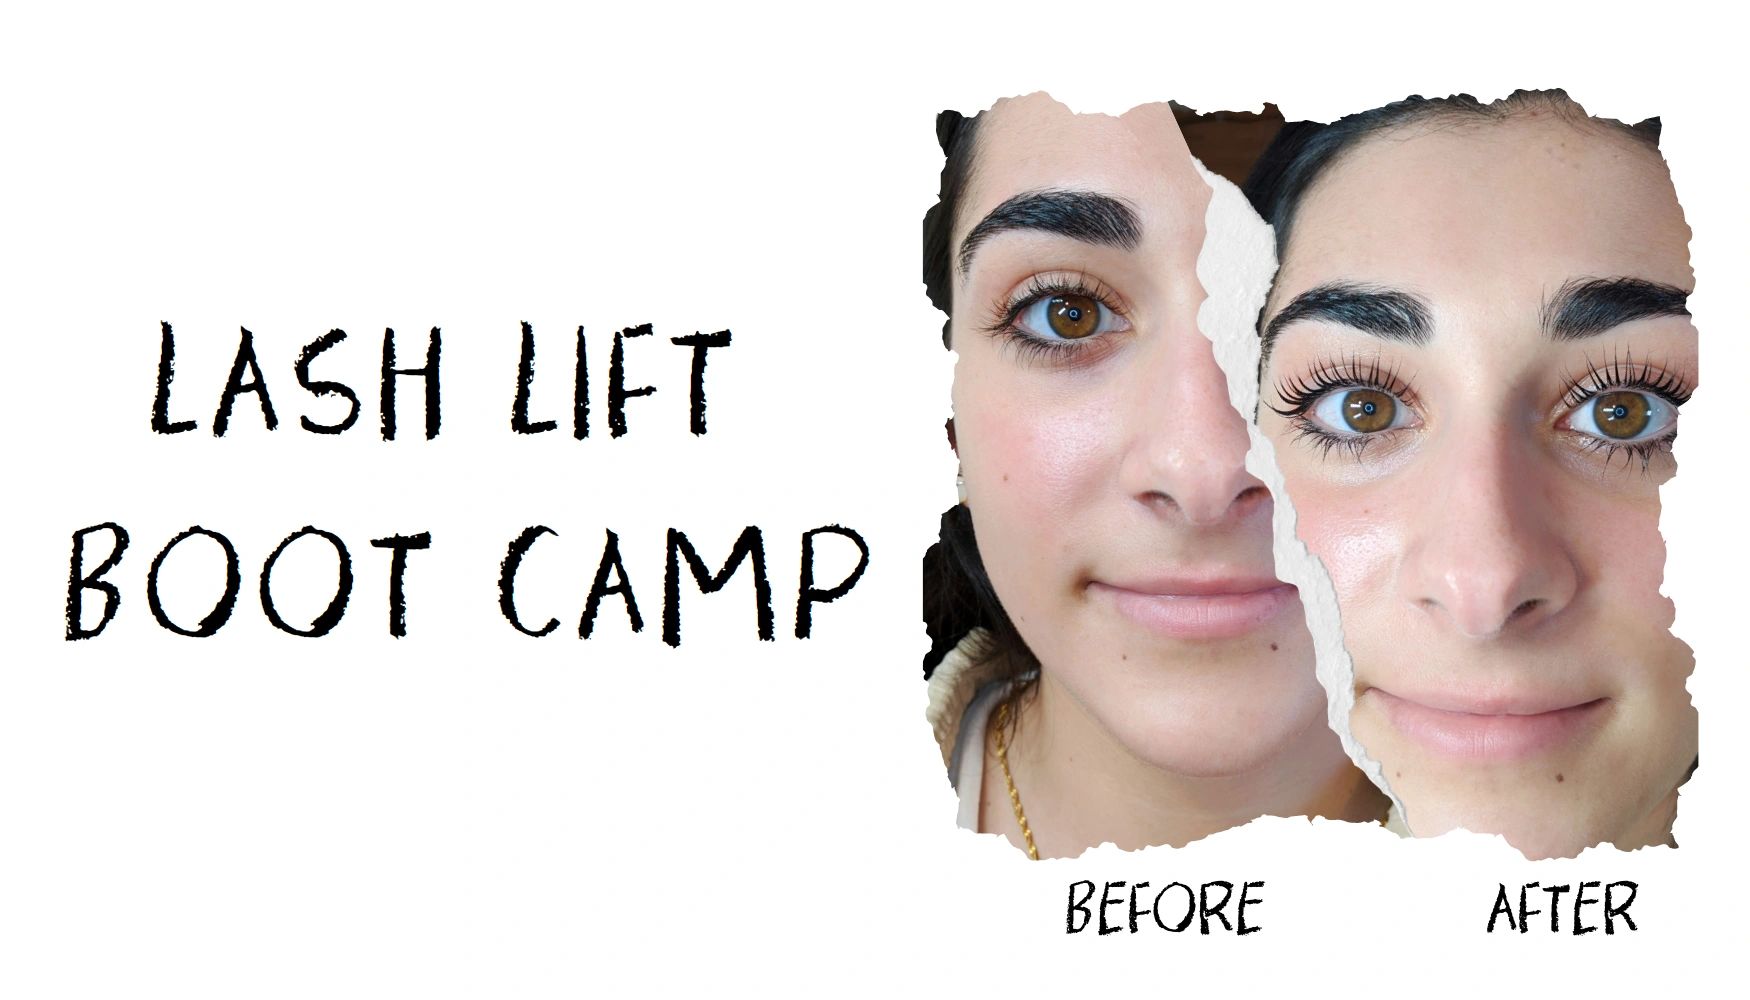 eyelash extensions
Lamination
Lash Lift Training
Volume Lash Class
Brow Wax and Tint
Academy courses